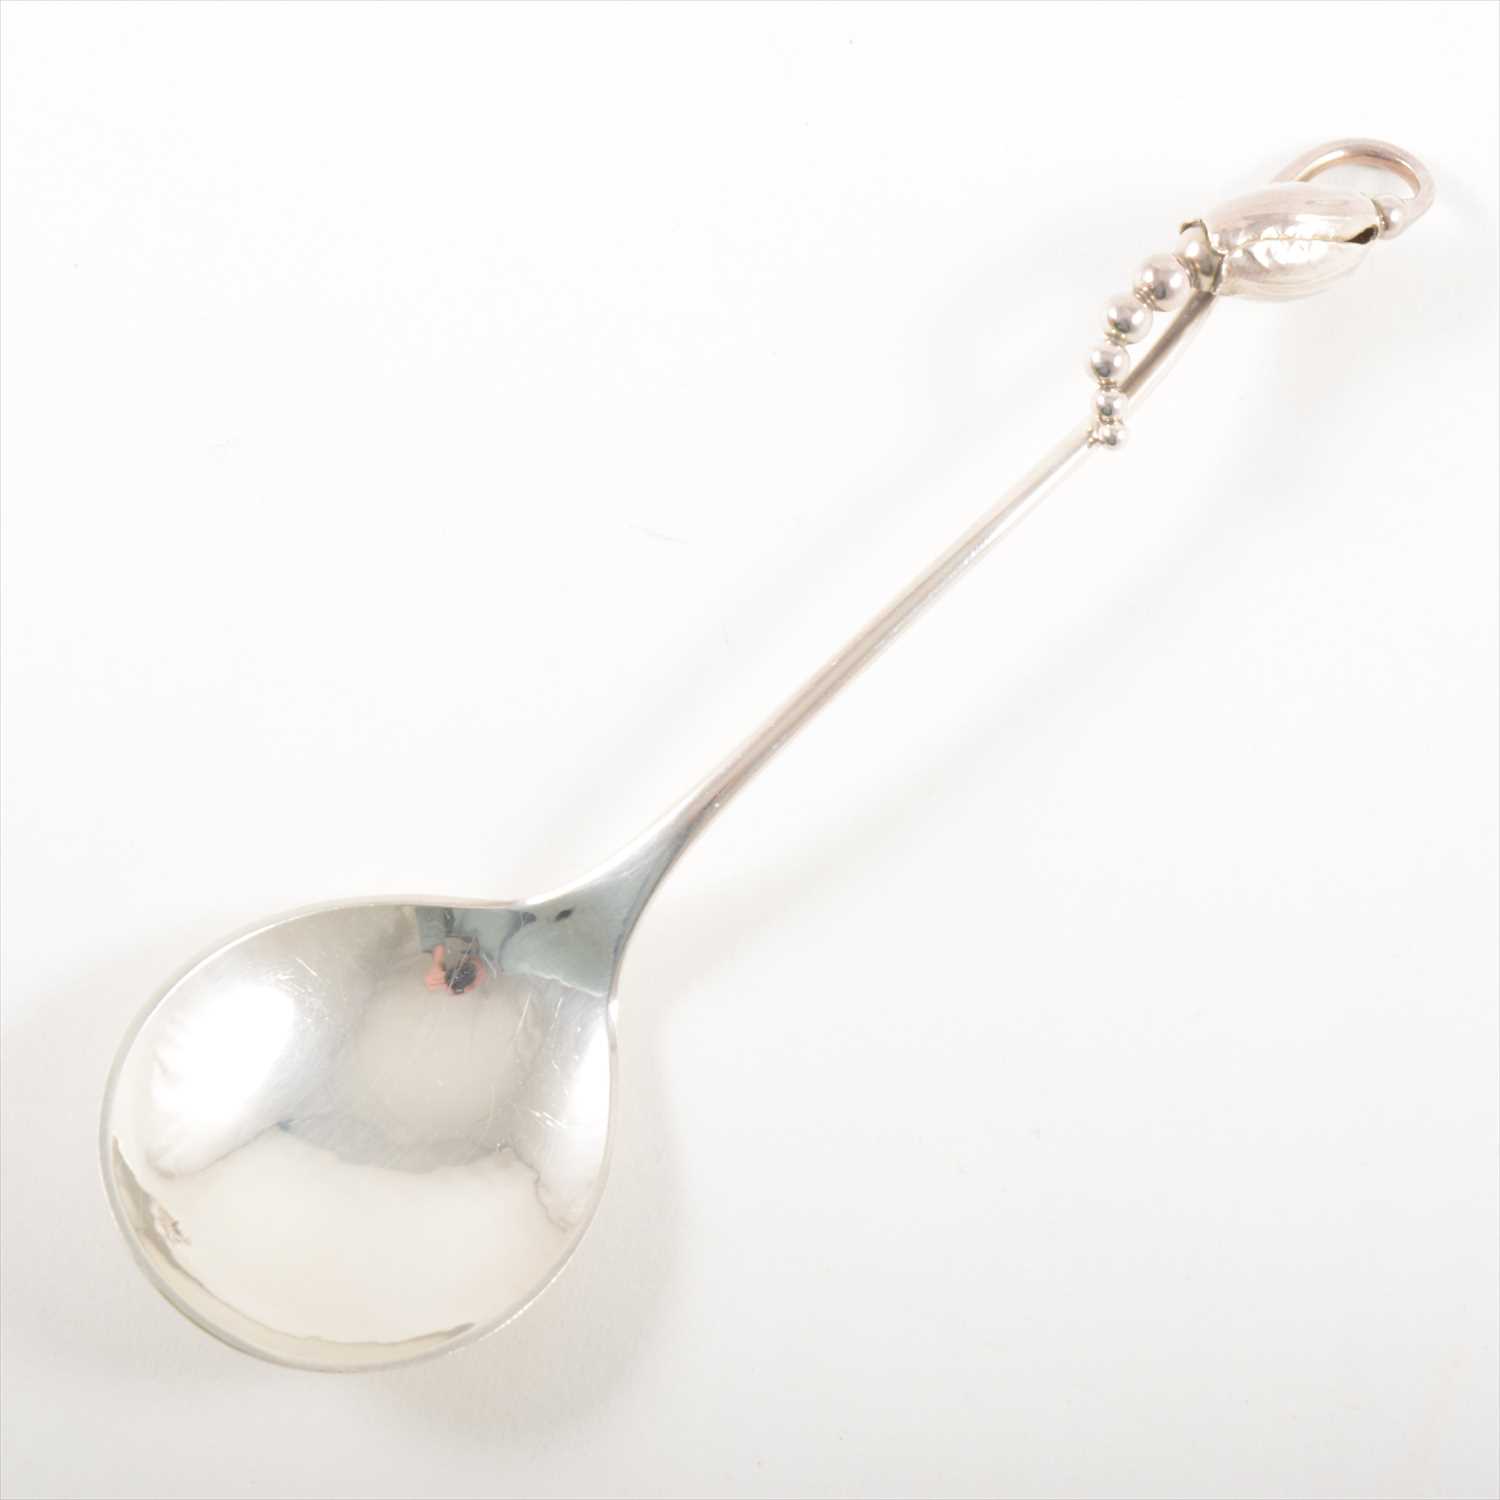 Lot 188 - A sterling silver preserve spoon, Georg Jensen, post-1945.